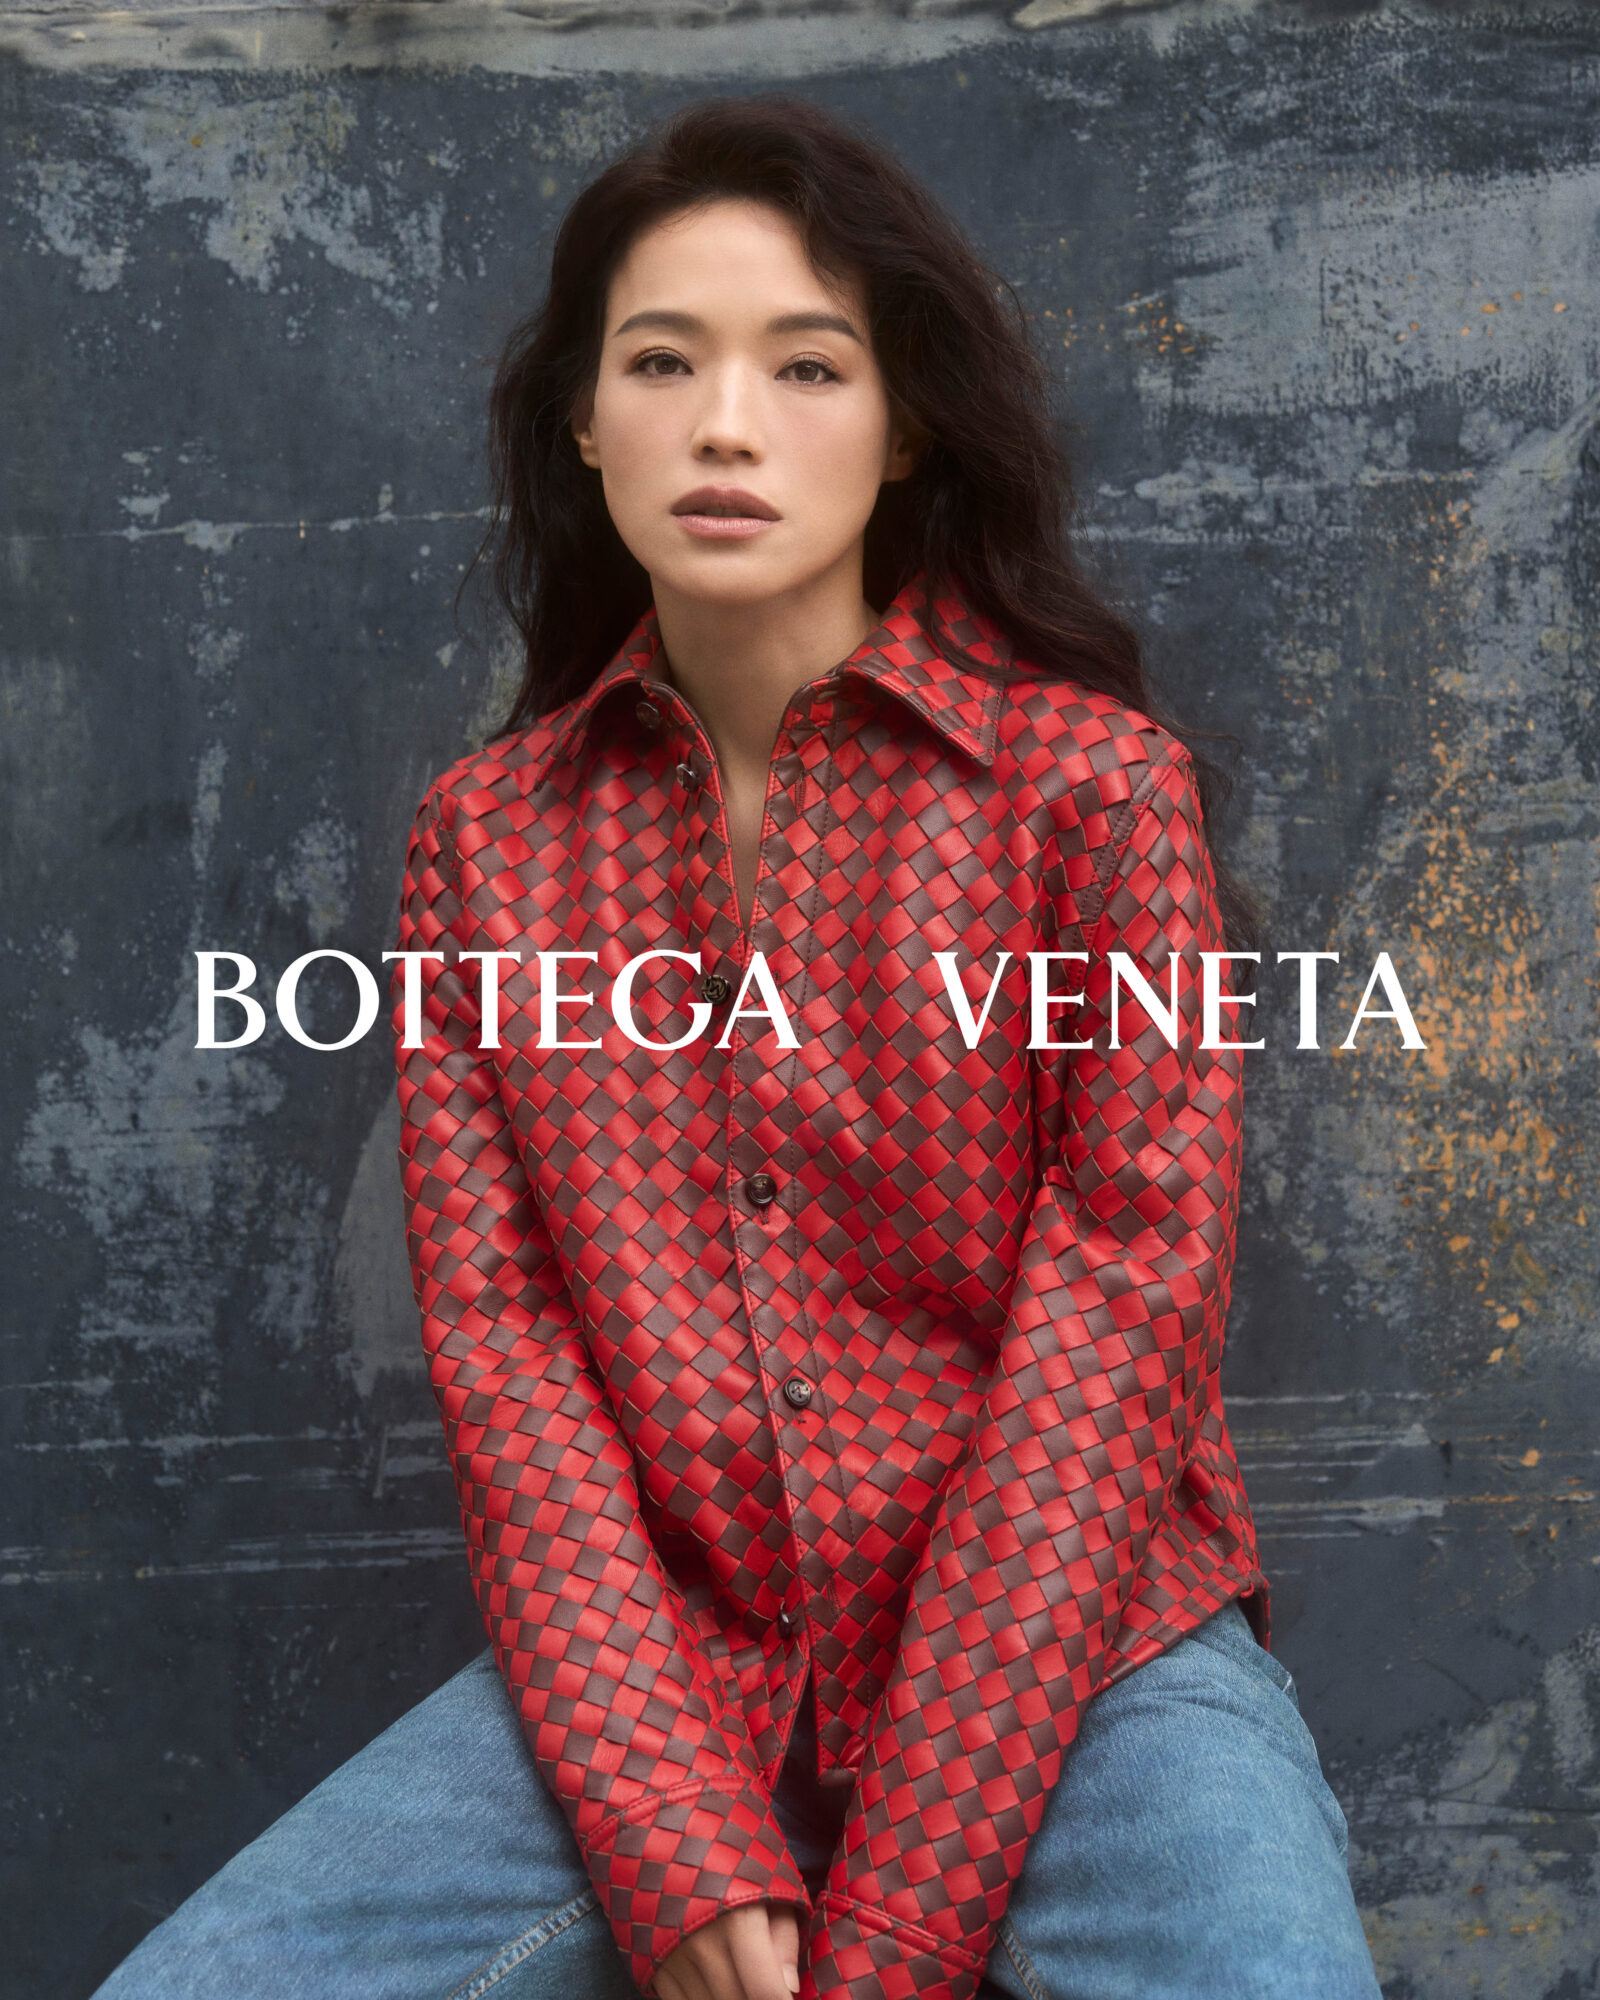 Shu Qi exudes effortless elegance in a vibrant red Bottega Veneta look, showcasing the brand's signature craftsmanship.